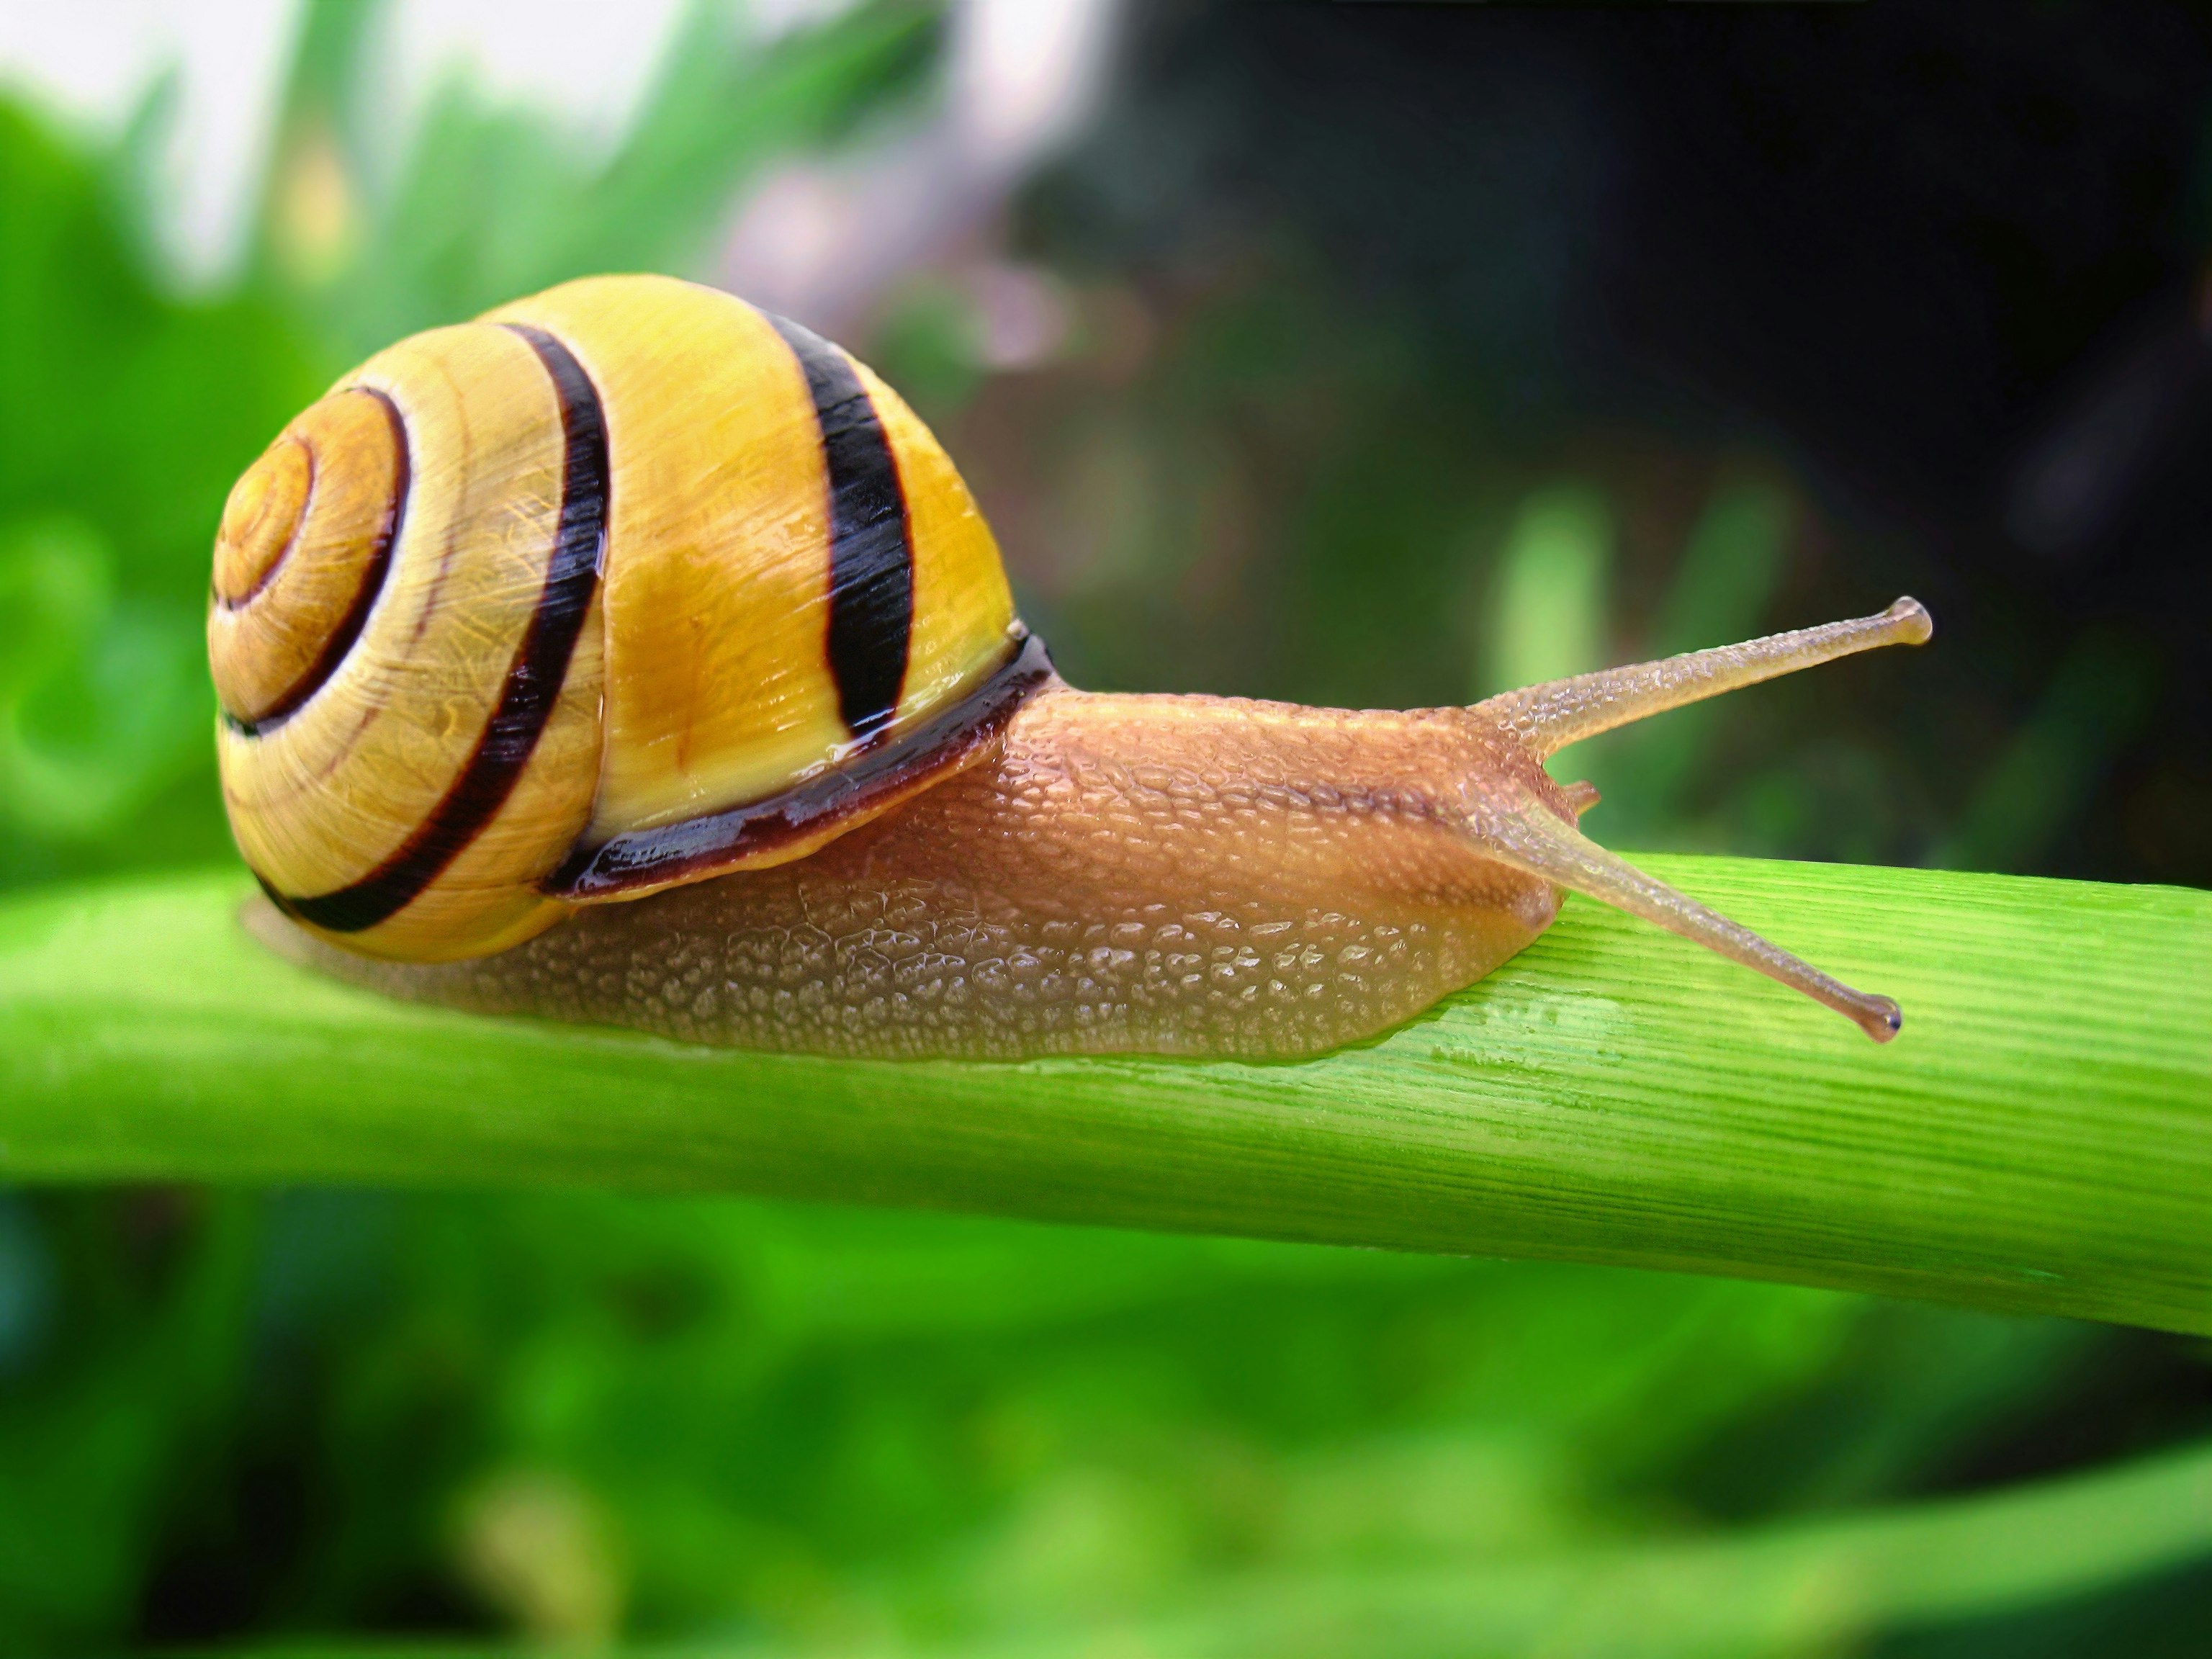 A yellow grove snail on a leaf.